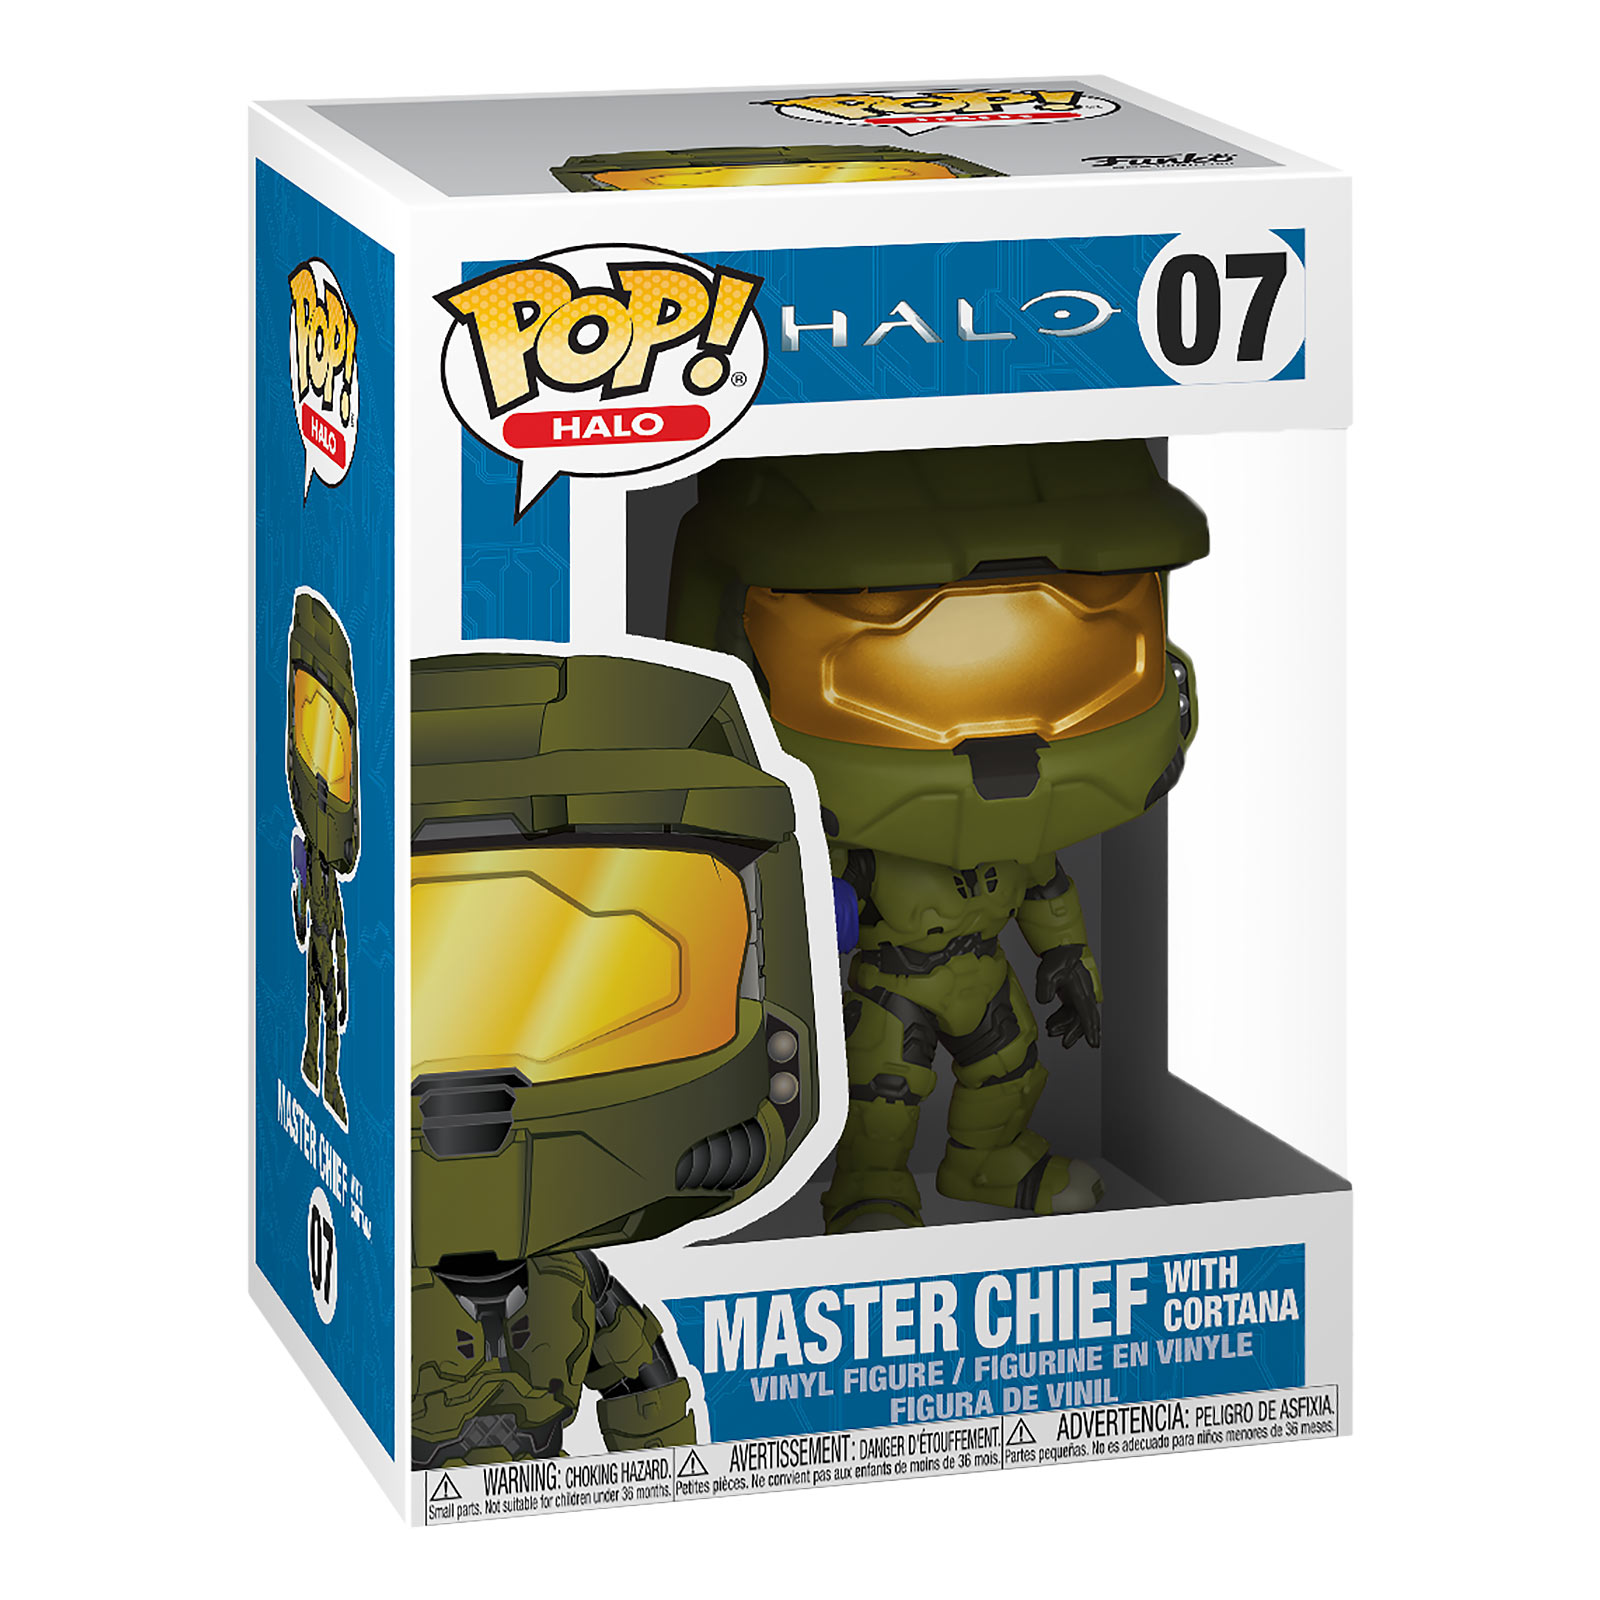 Halo - Master Chief With Cortana Funko Pop Figure